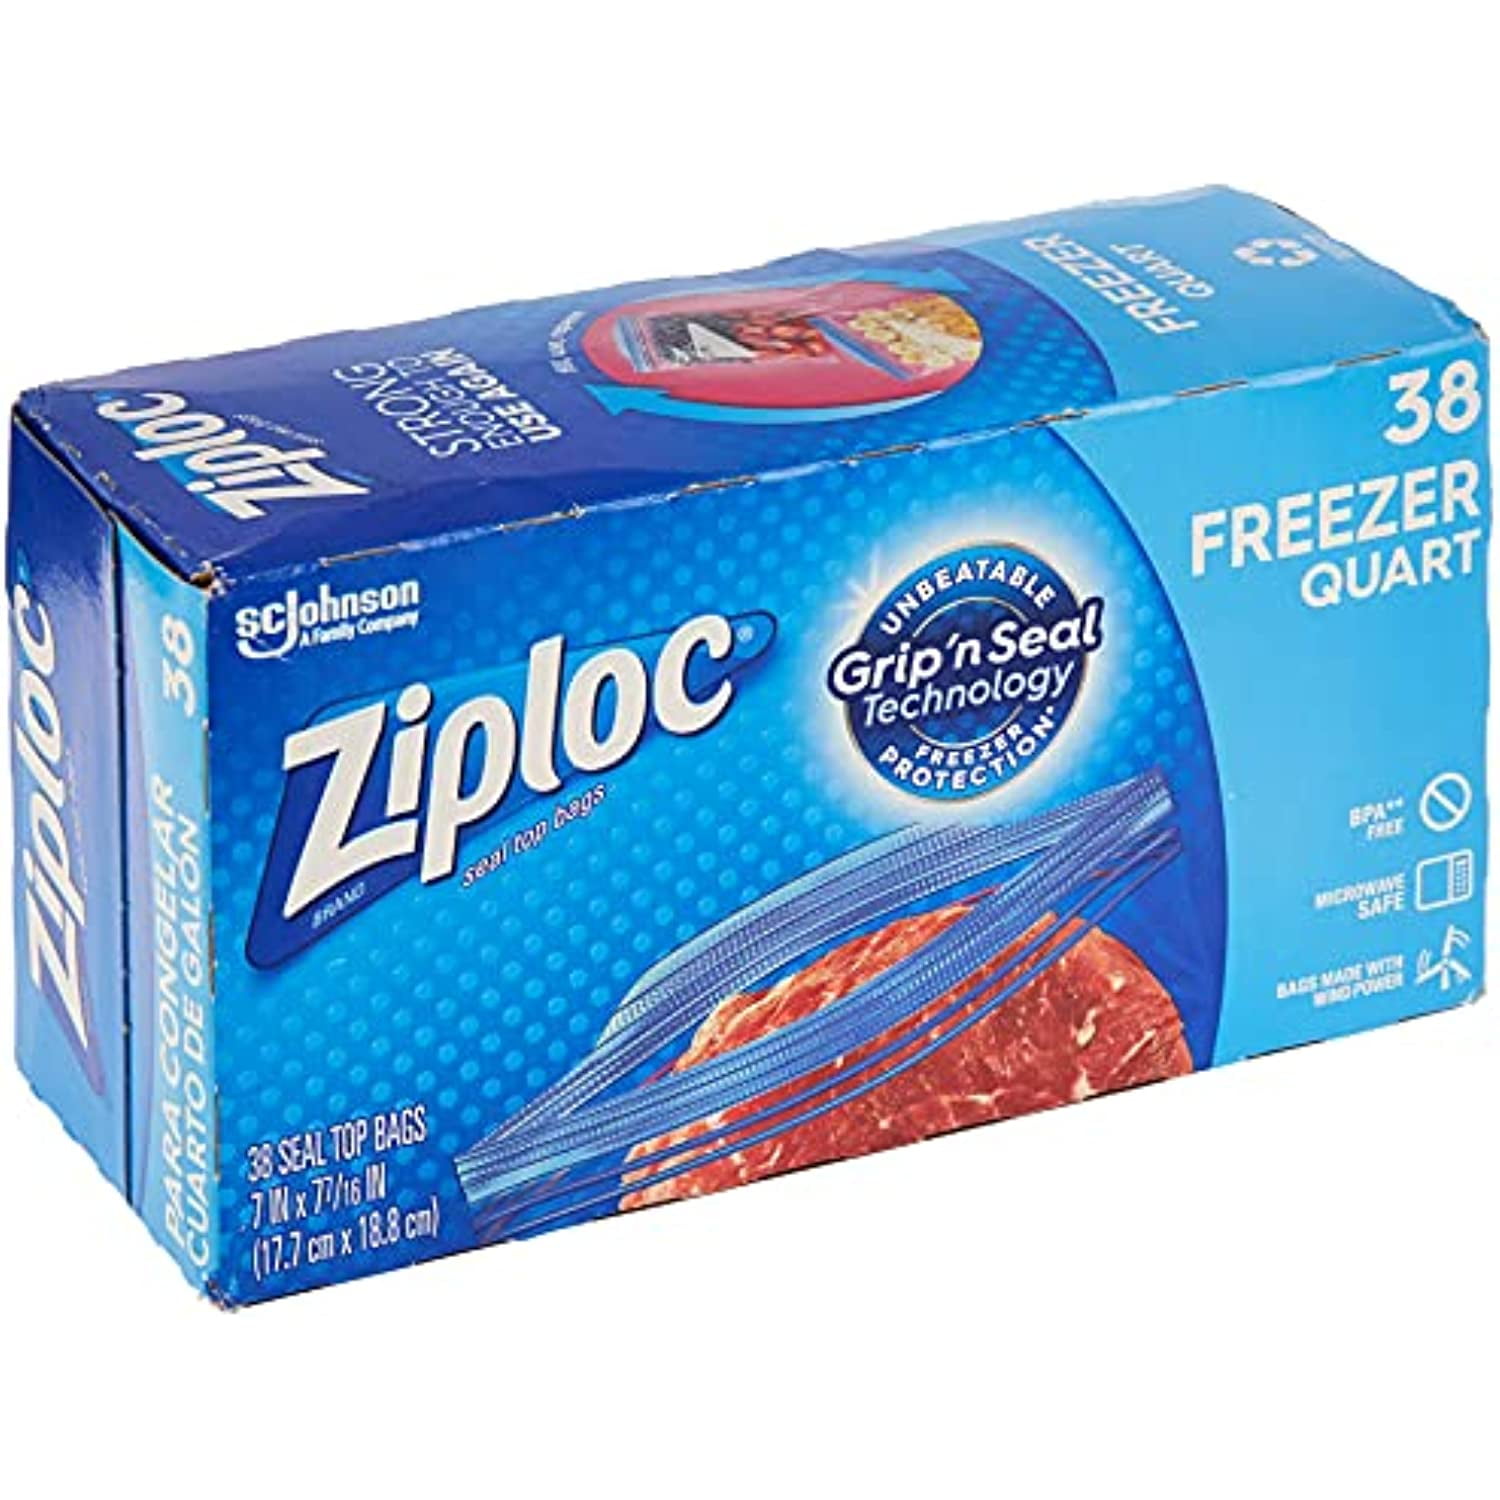 Ziploc Qt size freezer Bags 54 count - general for sale - by owner -  craigslist